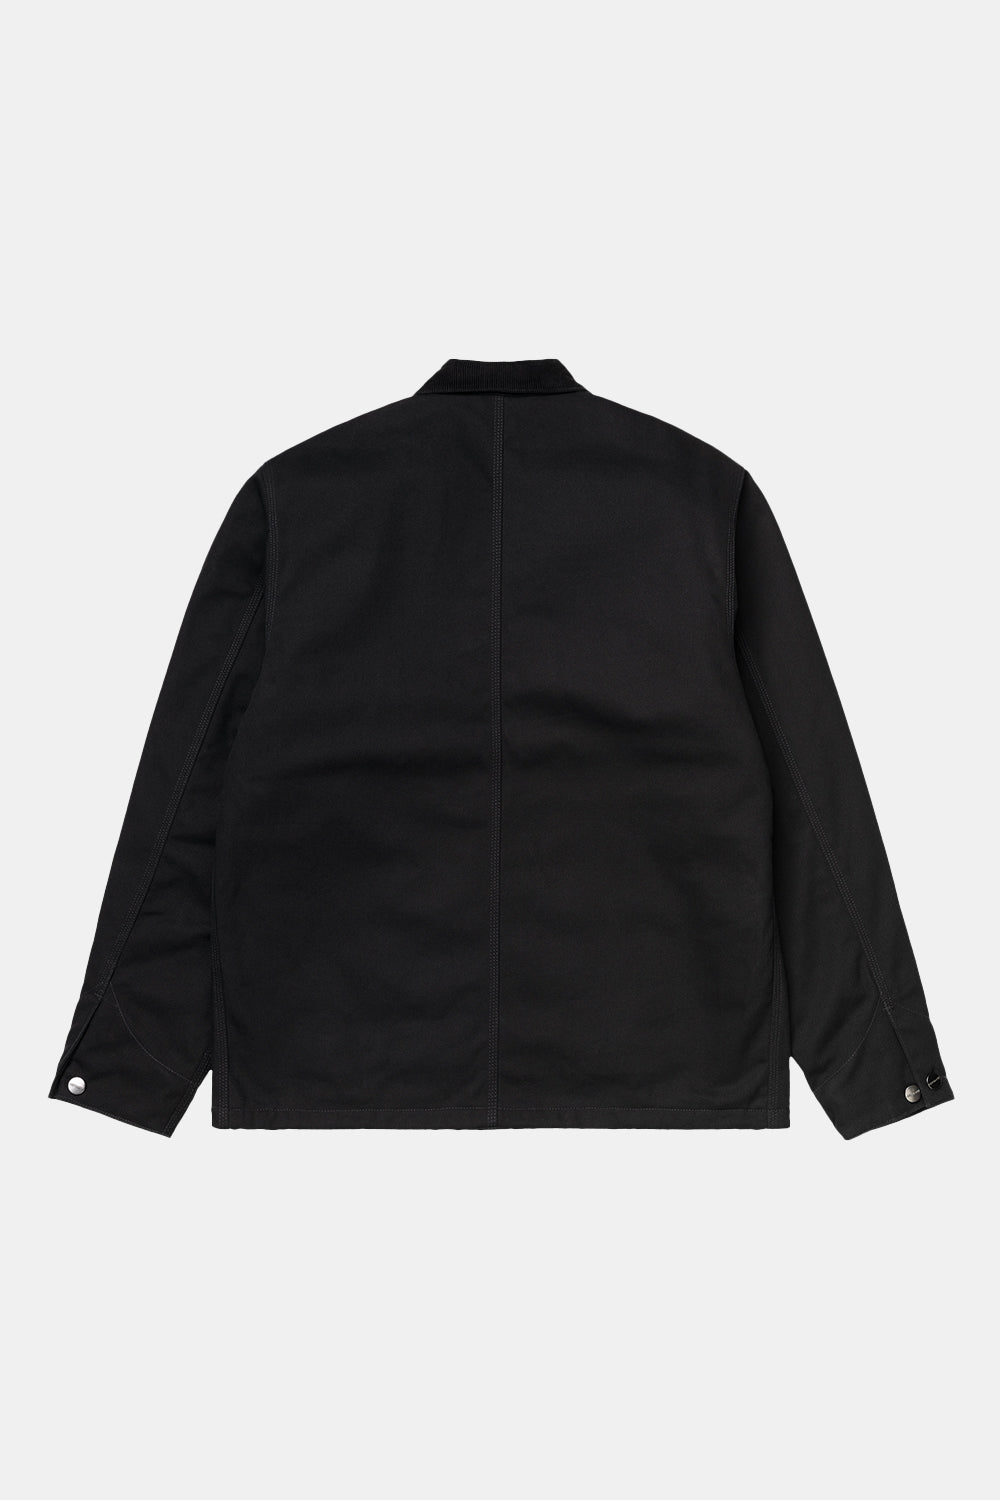 Carhartt Michigan Chore Jacket (Black/Black Rigid)